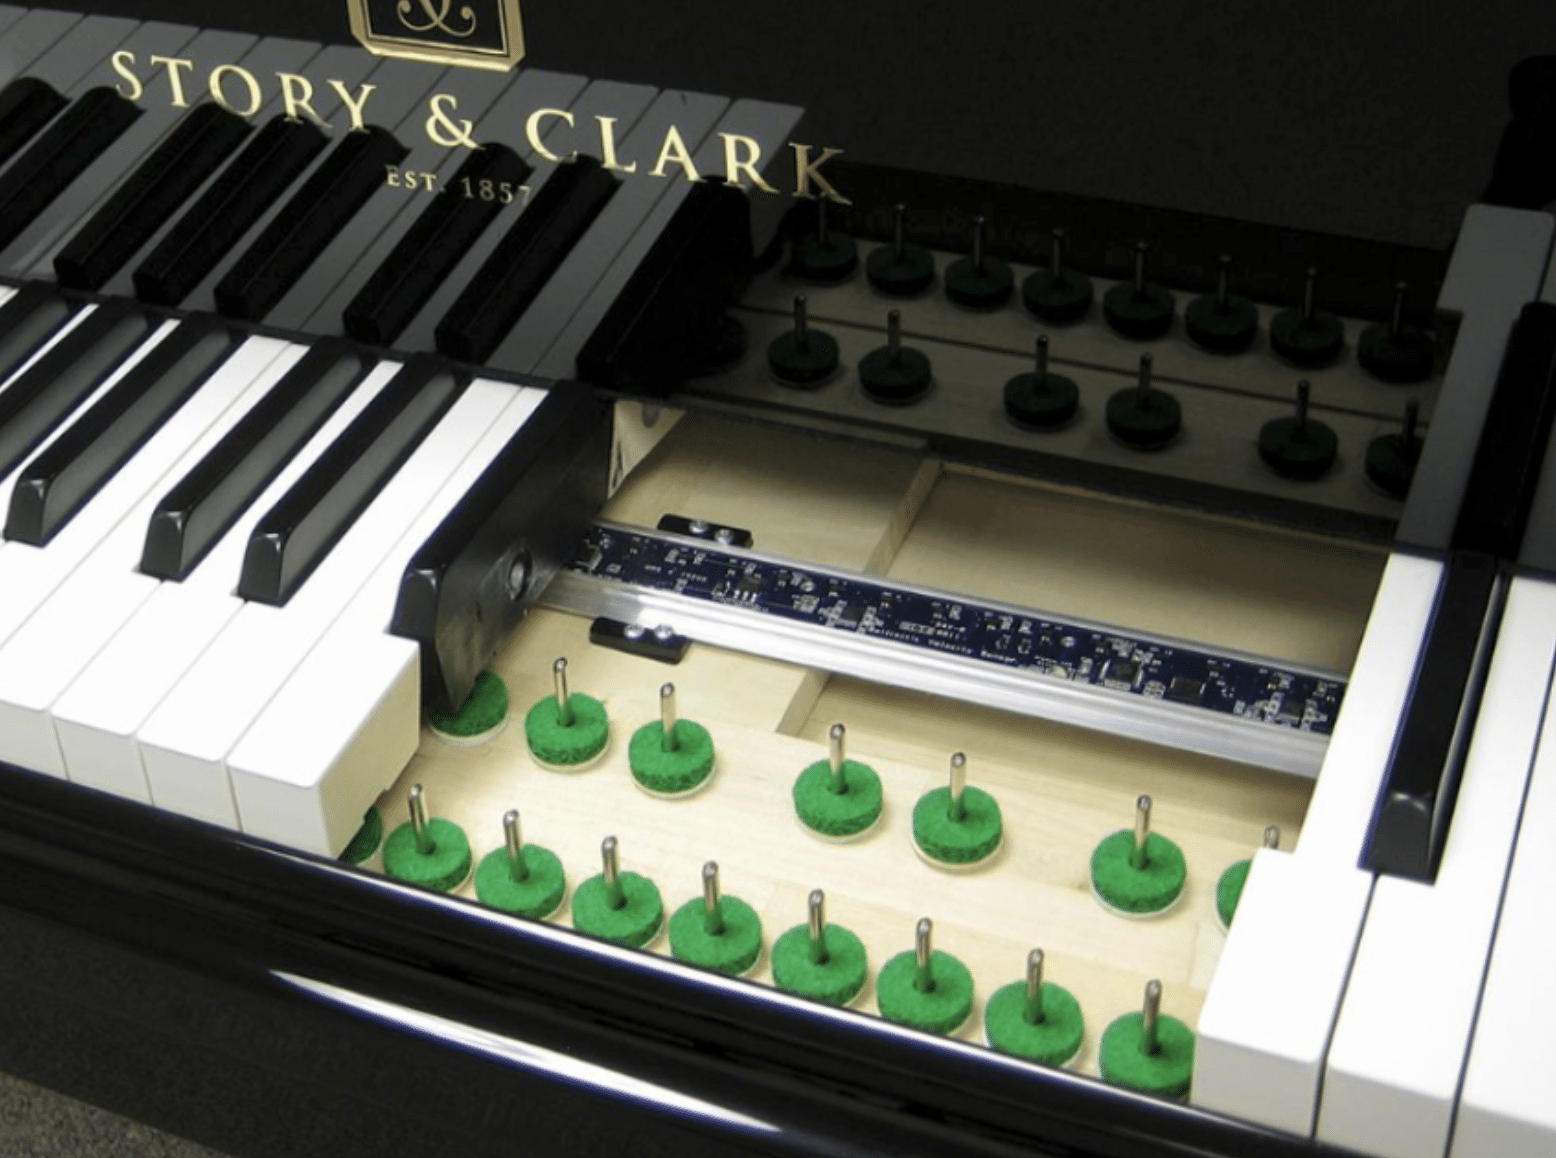 Essential Piano Accessories for Practice